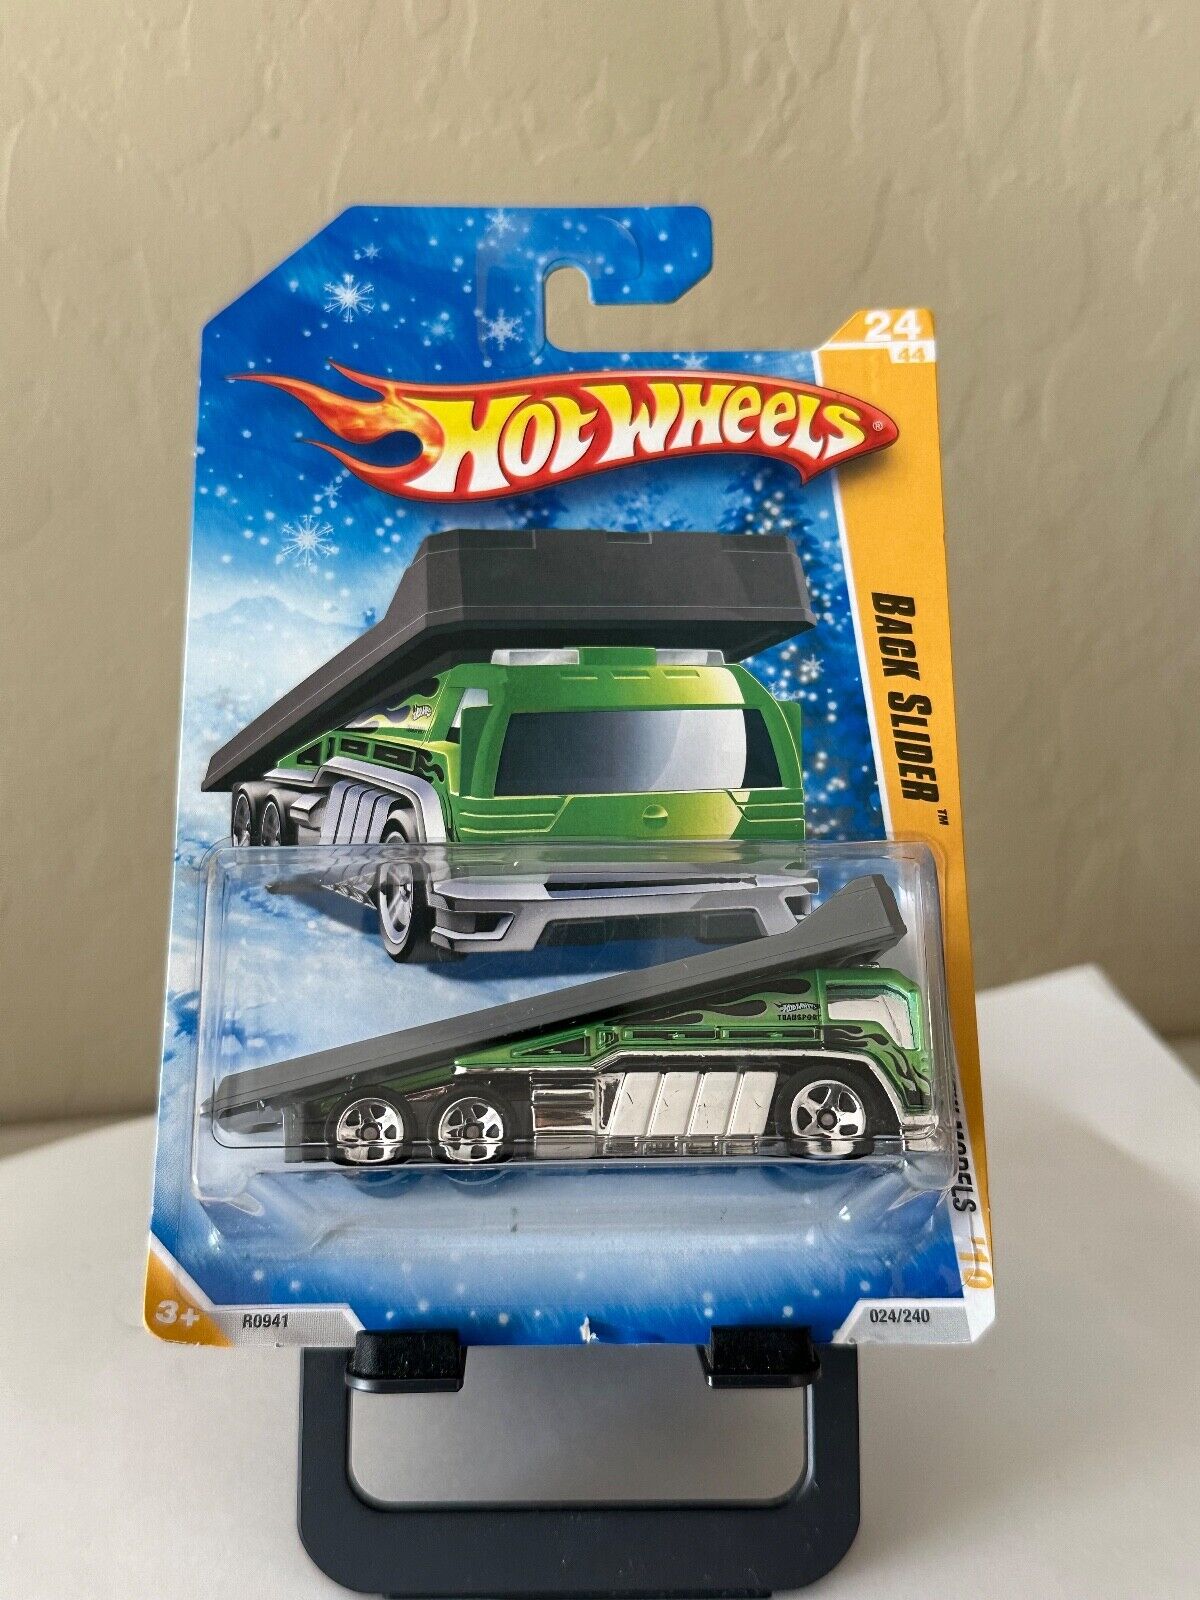 Hot Wheels 2010 New Models Back Slider Green #24 Snowflake Card L70